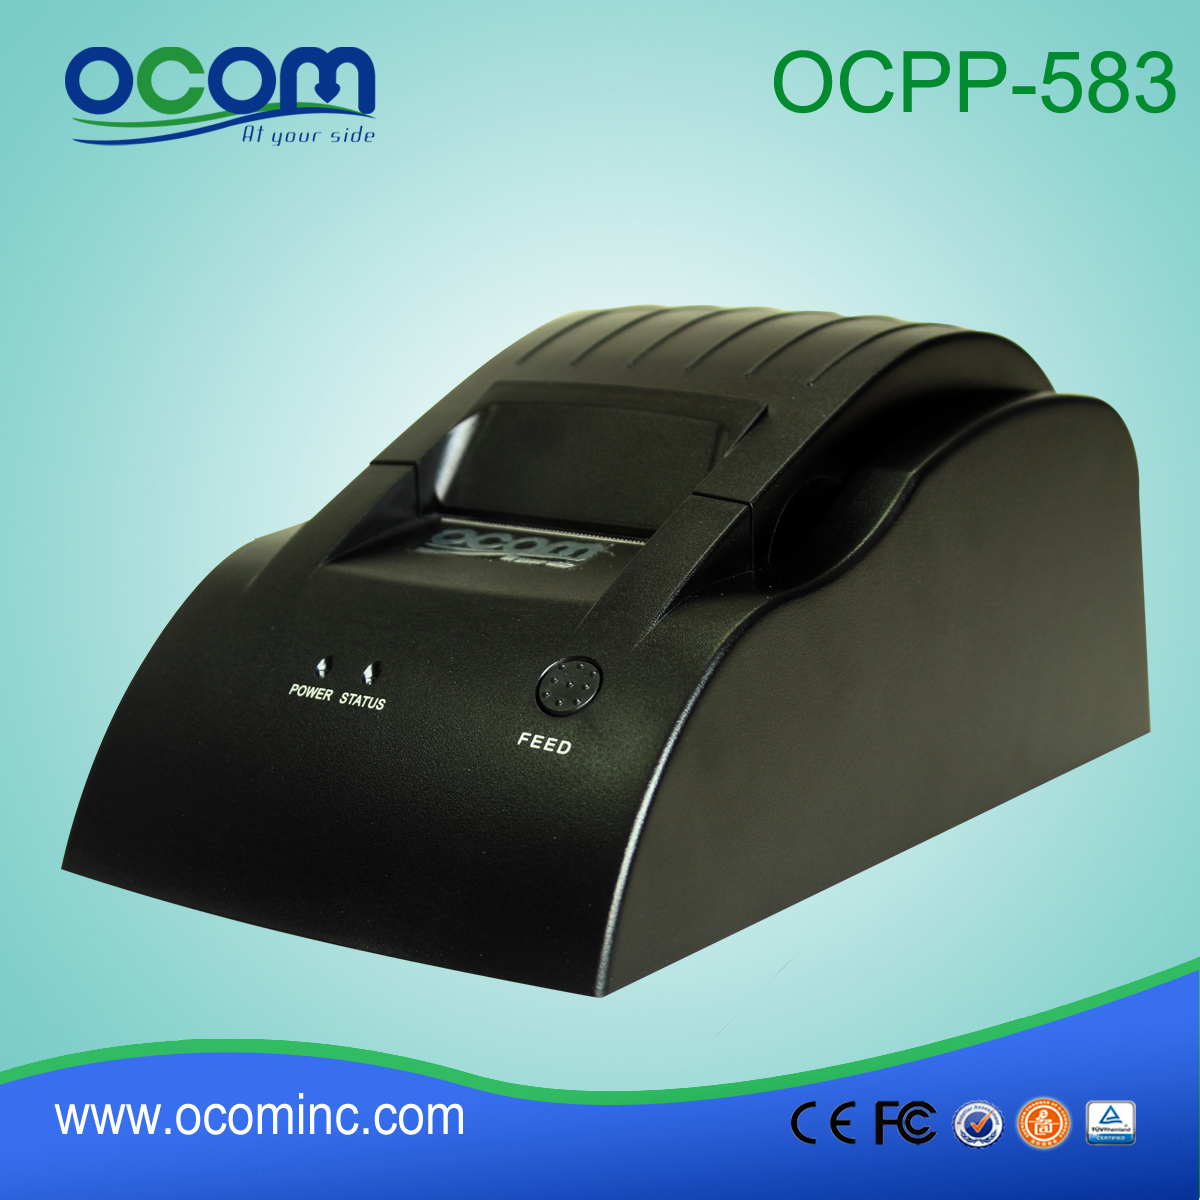 OCPP-583: 2015 Thermodirektdrucker Preis, Thermo-Kassendrucker